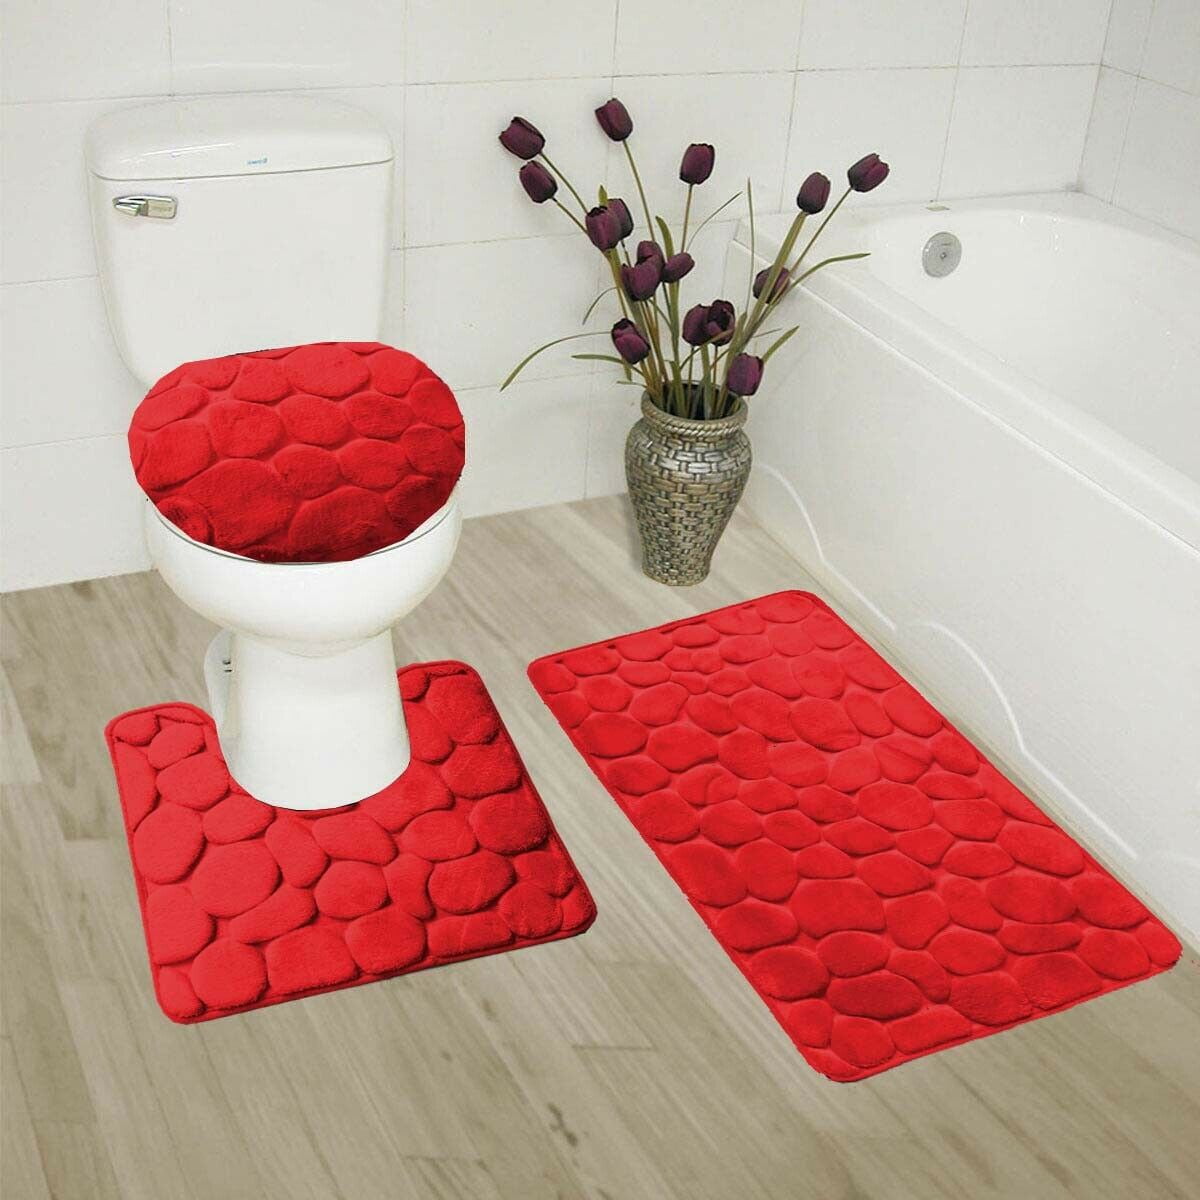 SAM2011 New Complete Bathroom Set 3 Pieces Memory Foam Rock Design Ultrasoft Underfoot Touch 1 Bat Mat, 1 Contour Mat, 1 Lid Cover Burgundy Color, Red